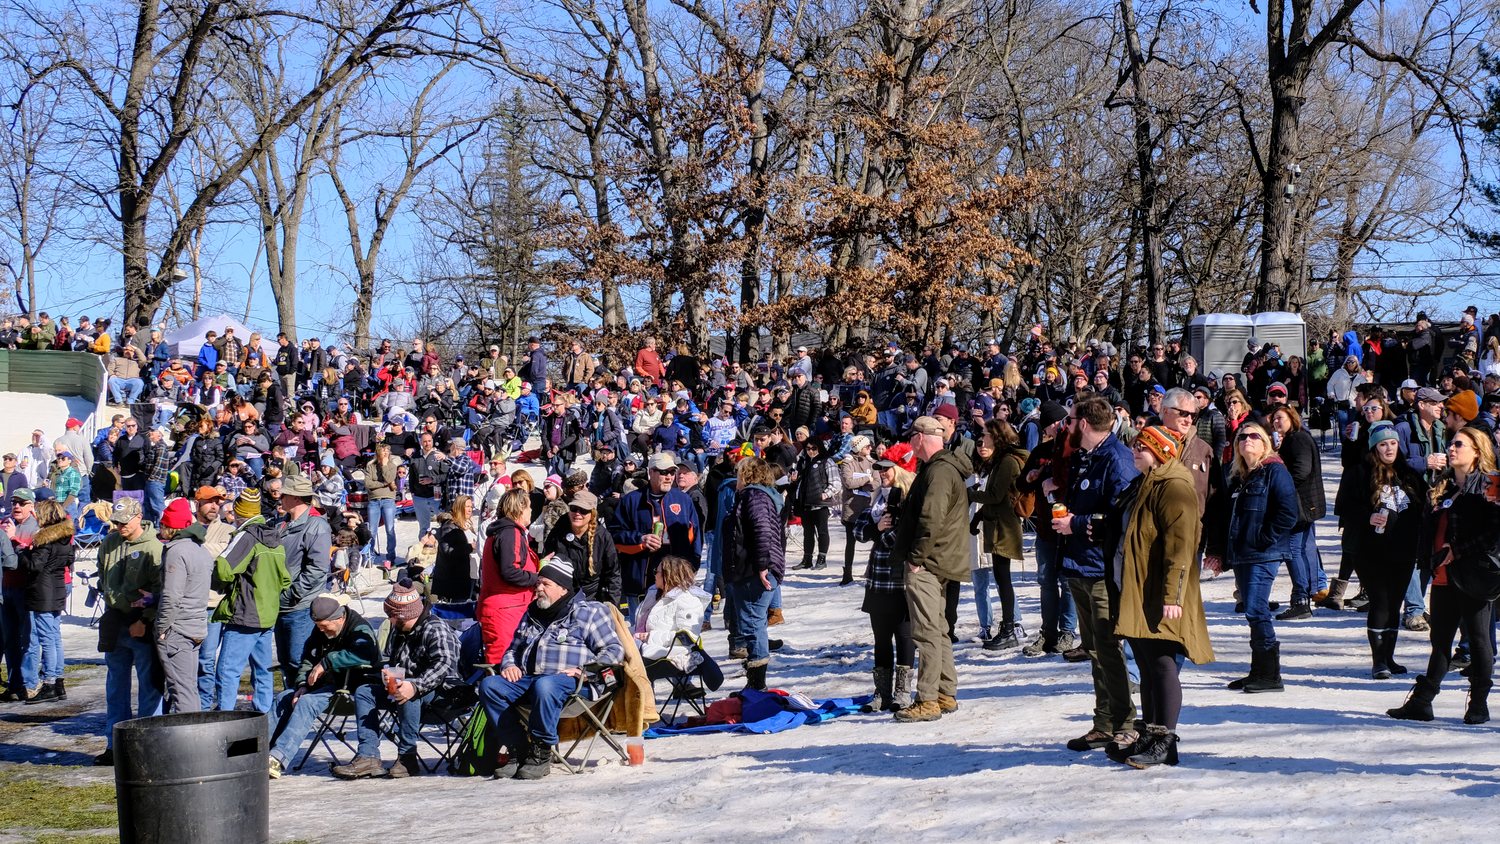 Spectators at the 118th Annual Norge Ski Club Winter Tournament.